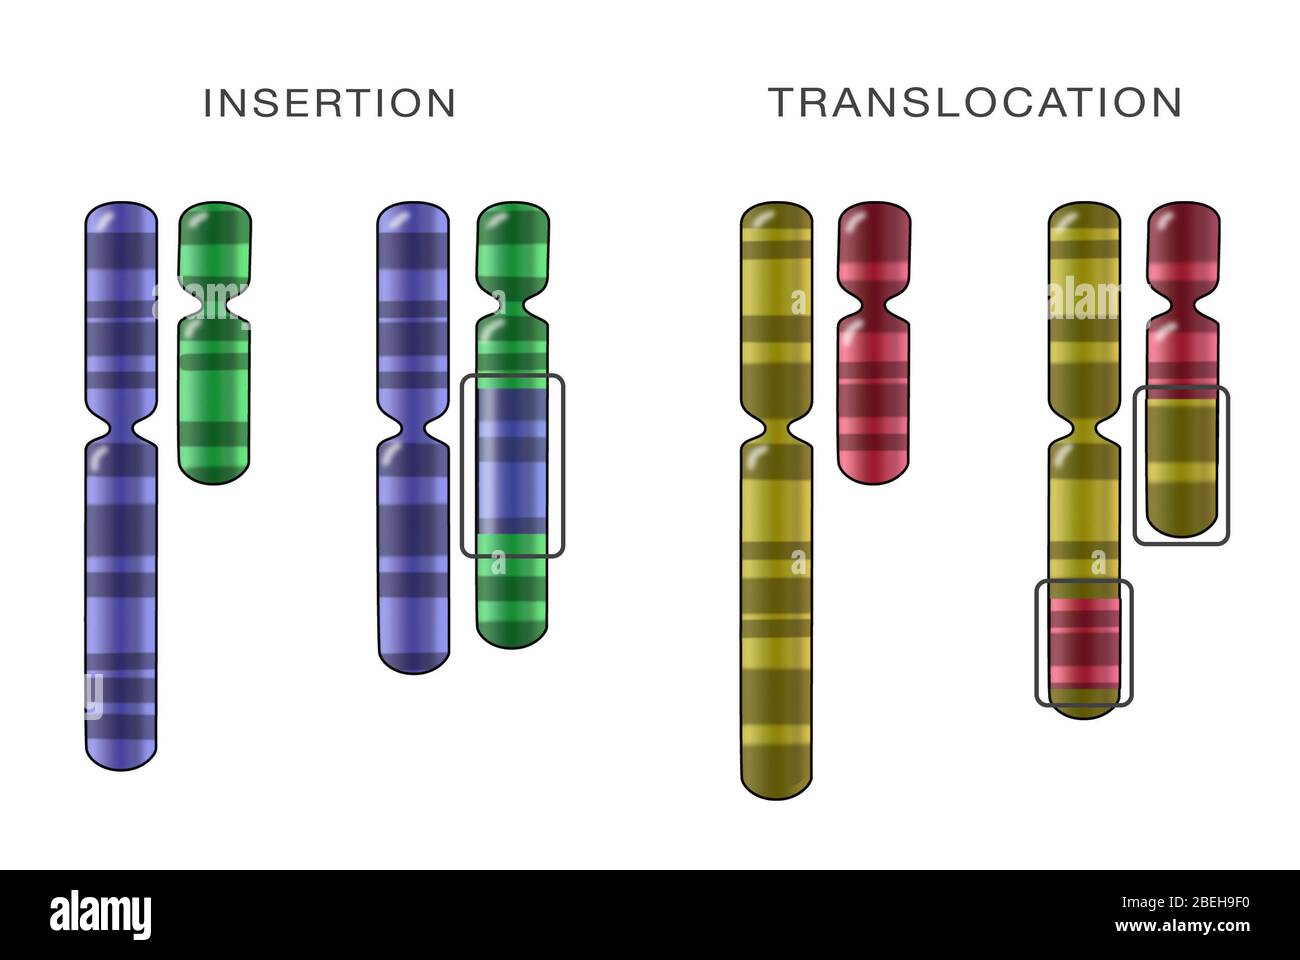 Chromosomeneinfügung Und Translokation, Abbildung Stockfoto